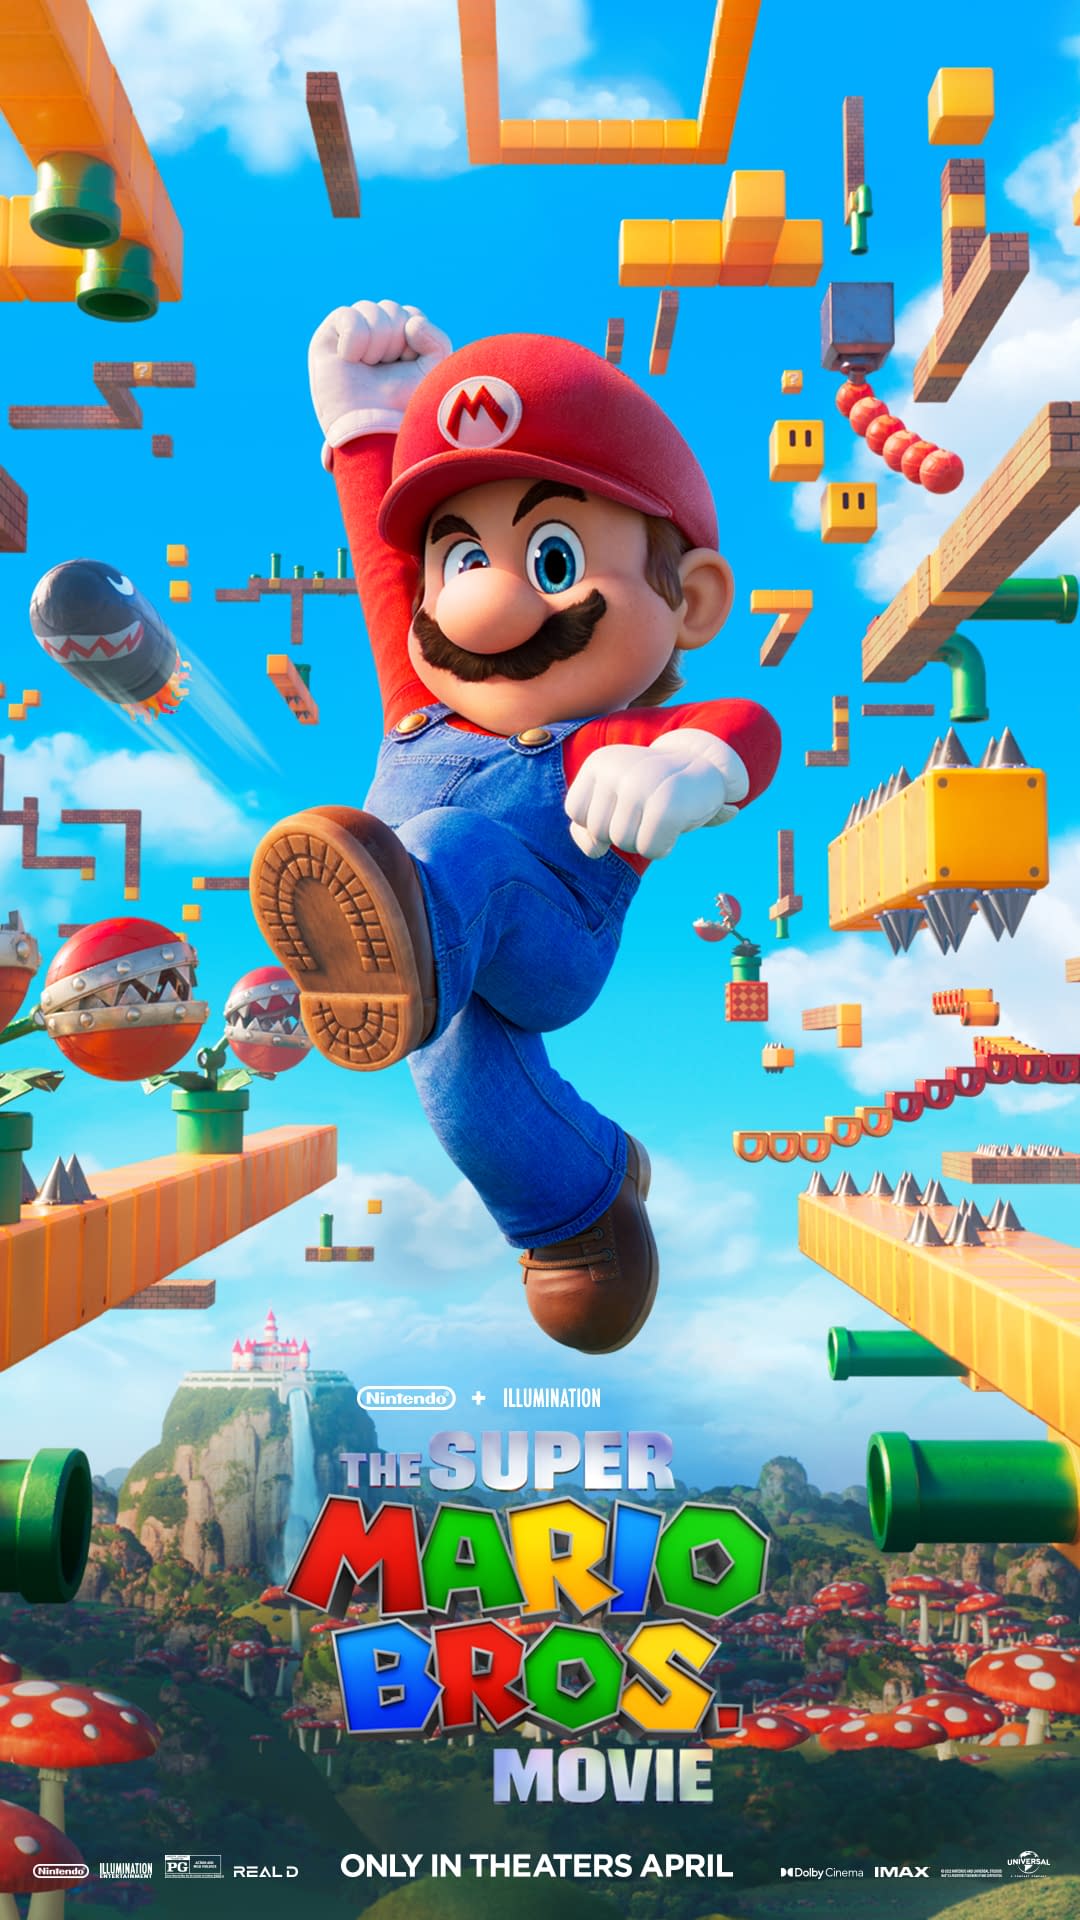 How to Watch Super Mario Bros Movie: Where to watch 'Super Mario